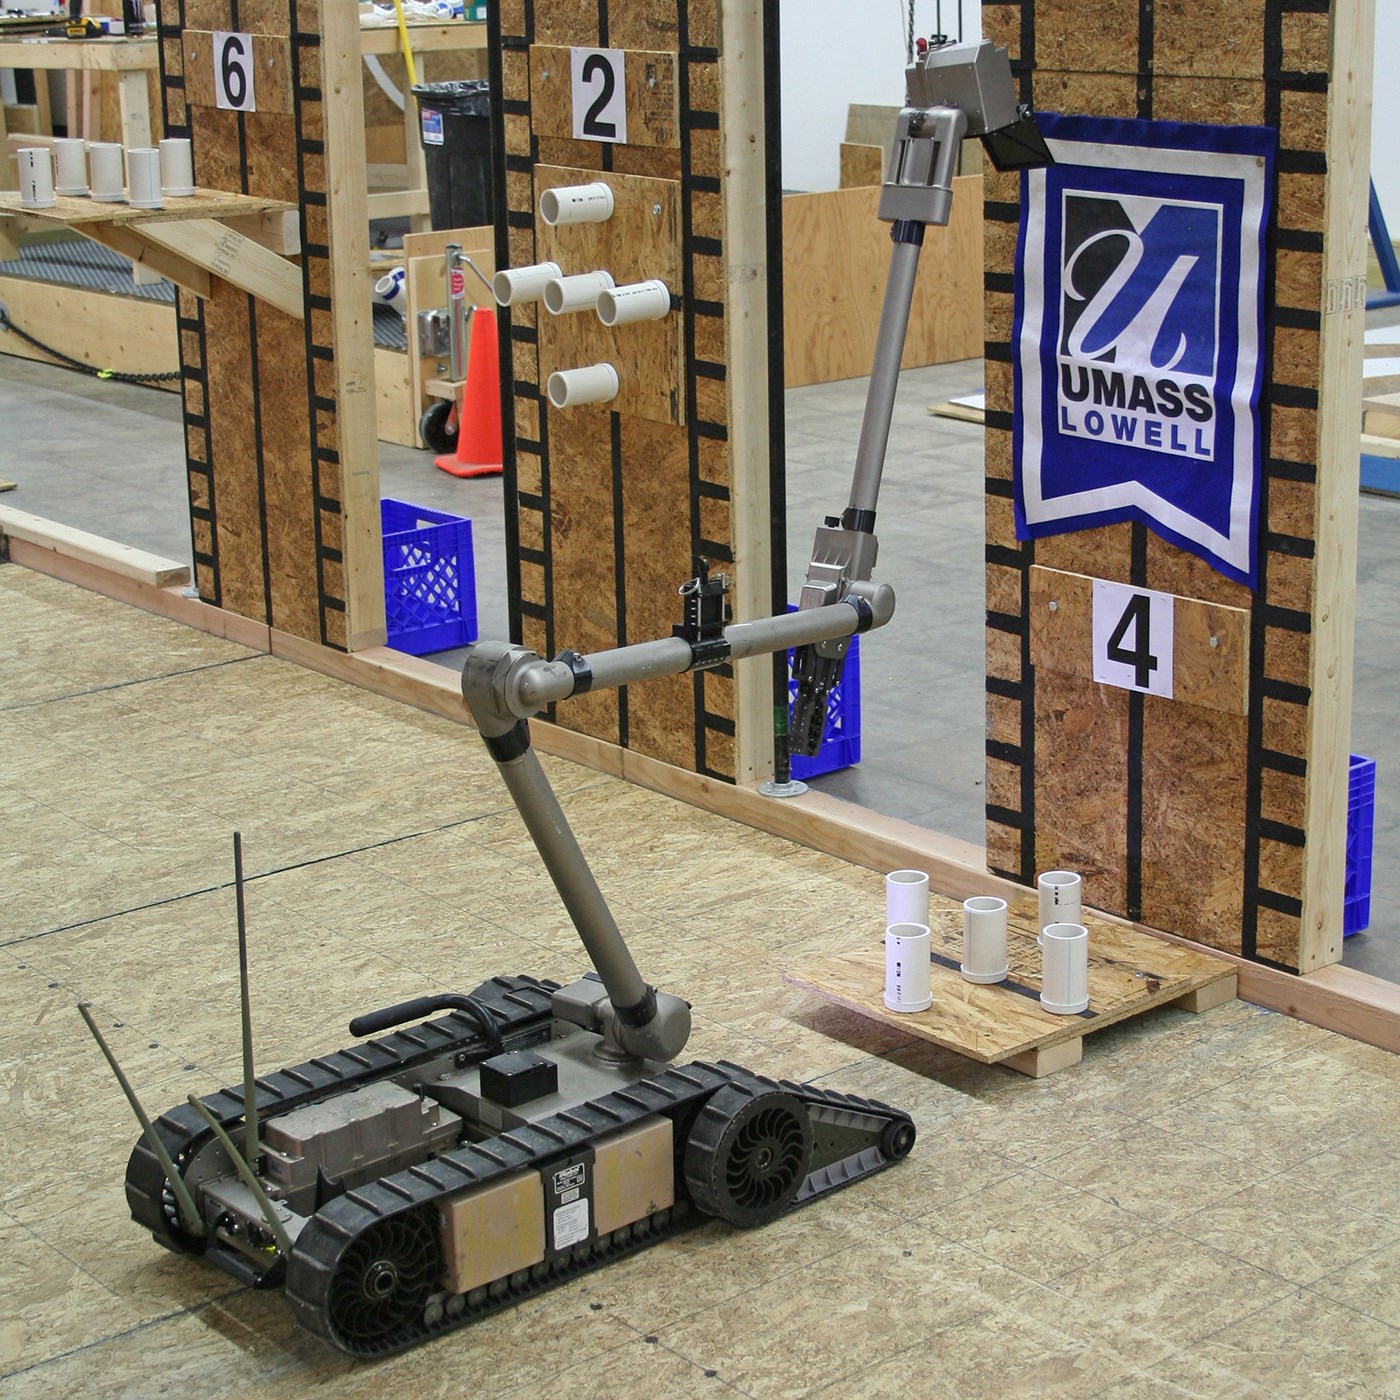 Endeavor Packbot response robot system inspecting a dexterity artifact.